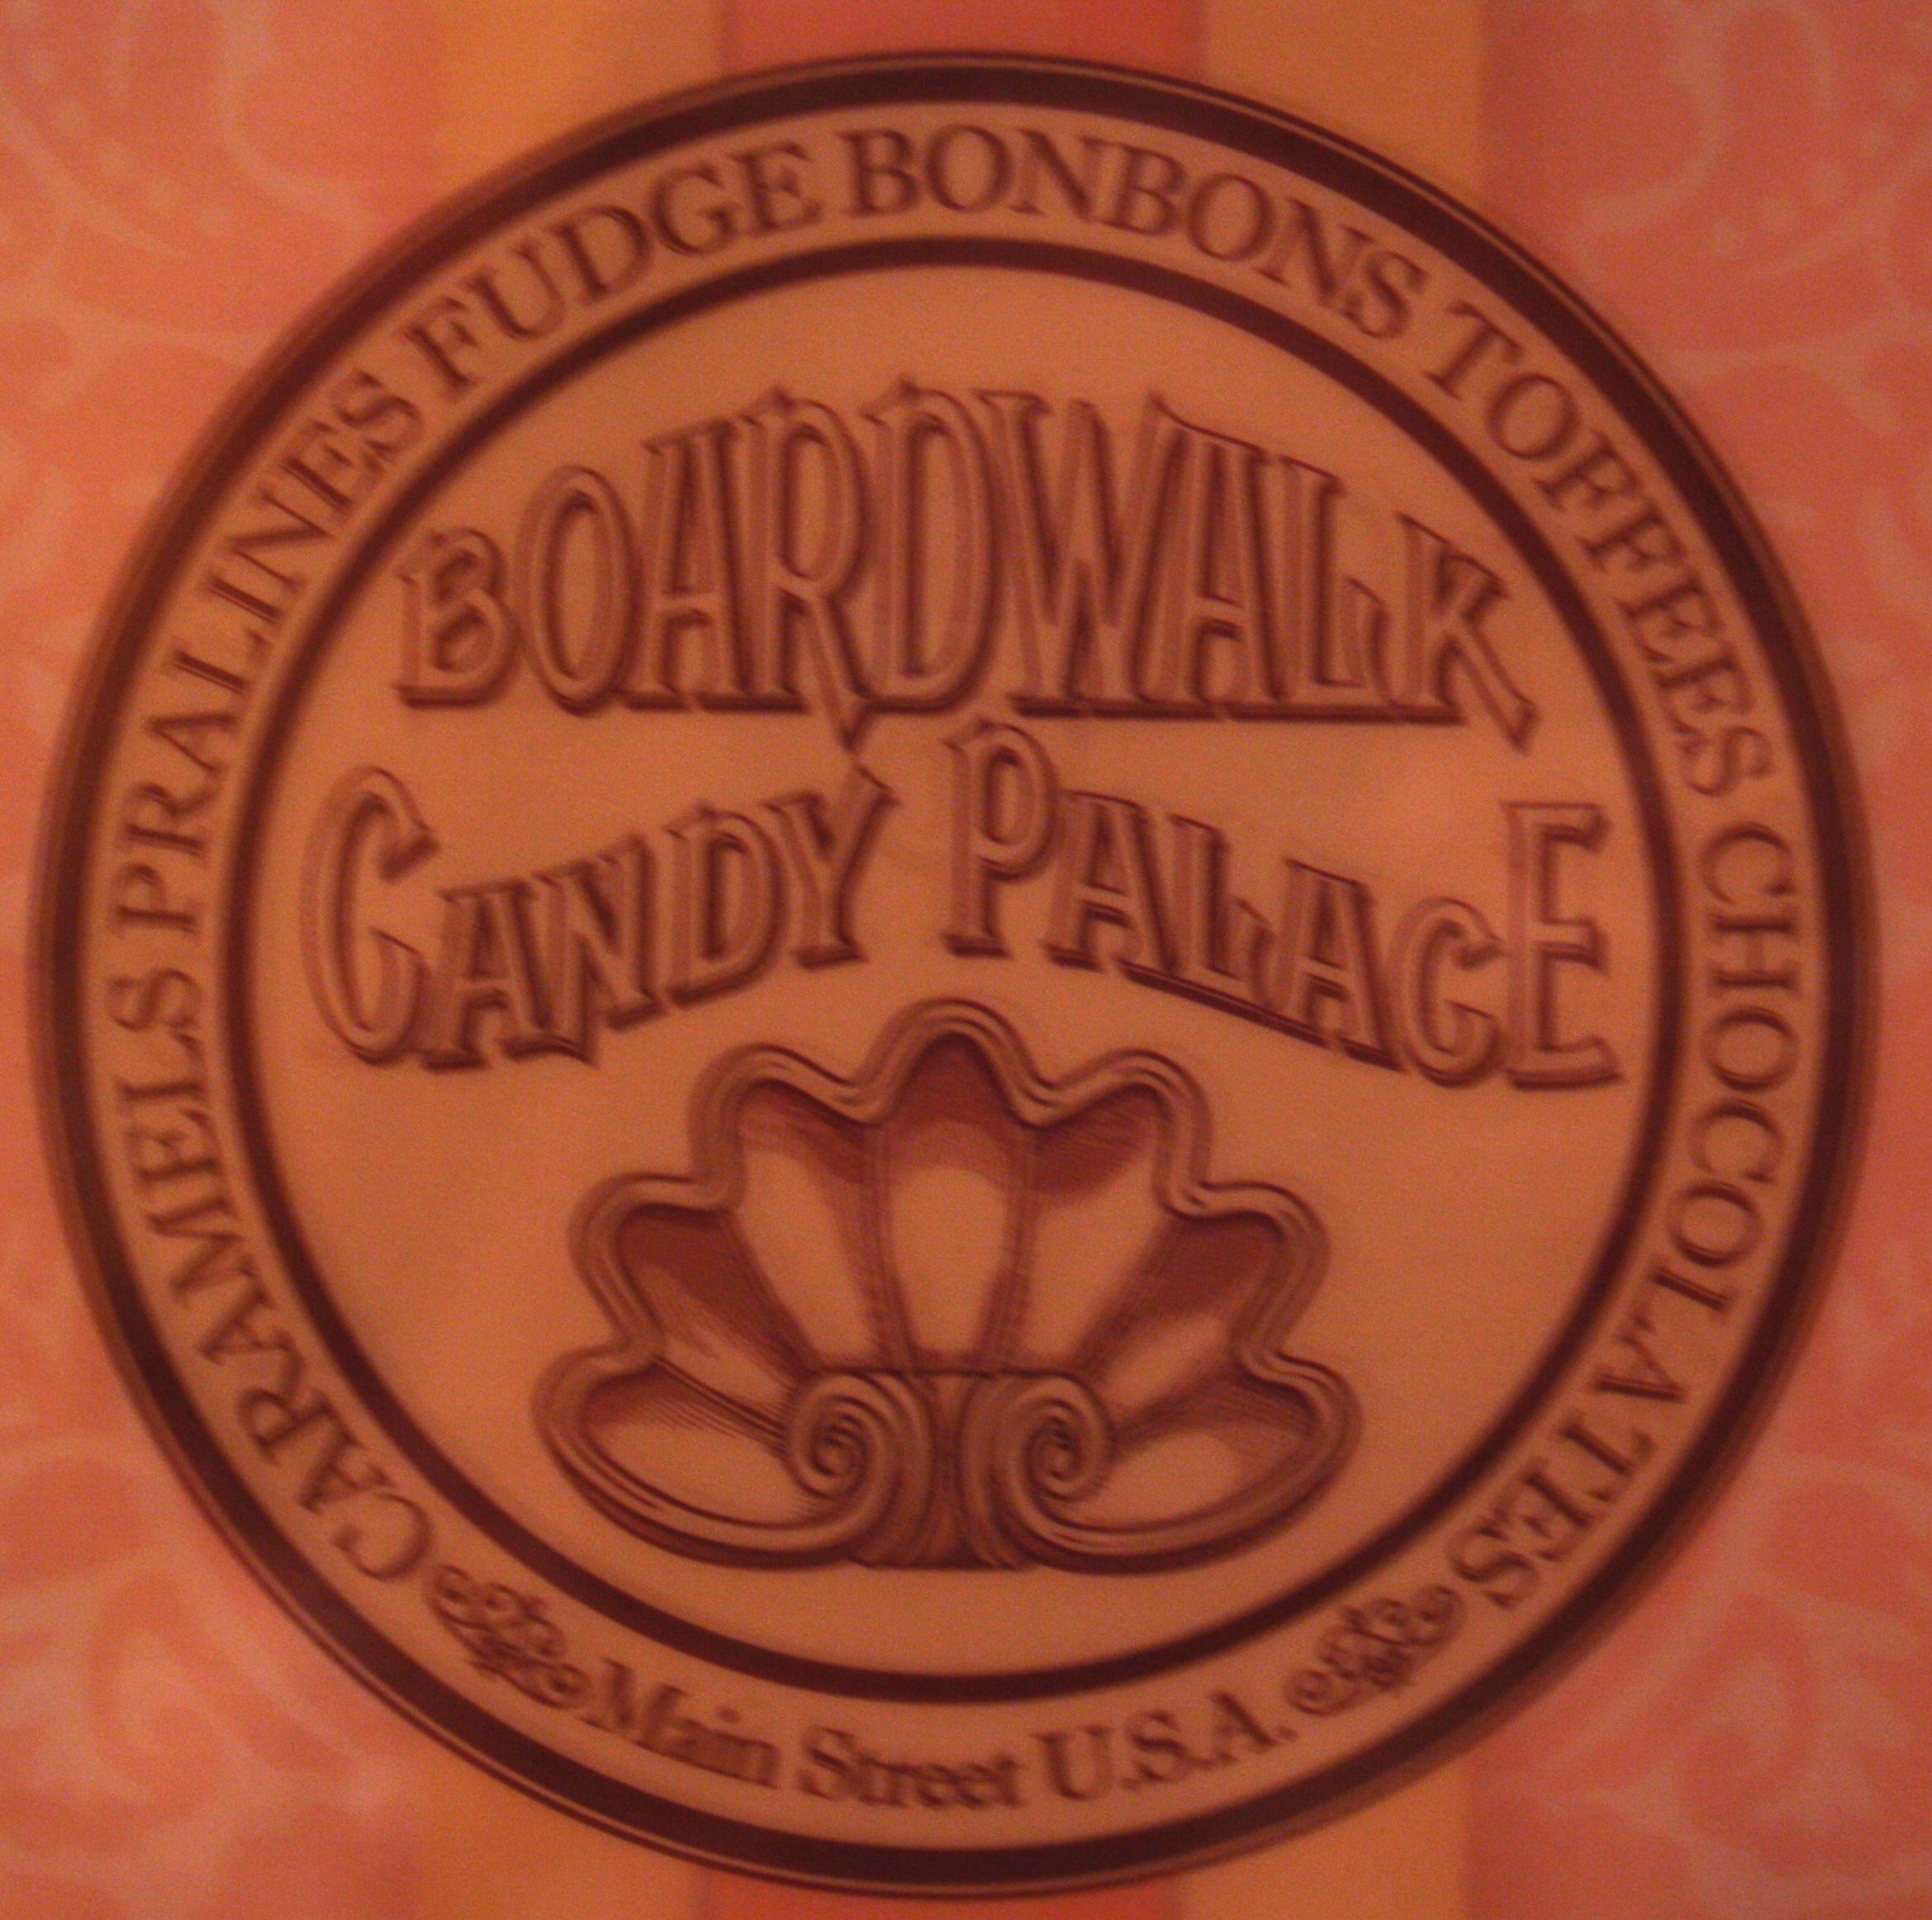 Candy Palace Logo - Boardwalk Candy Palace, Disneyland Paris